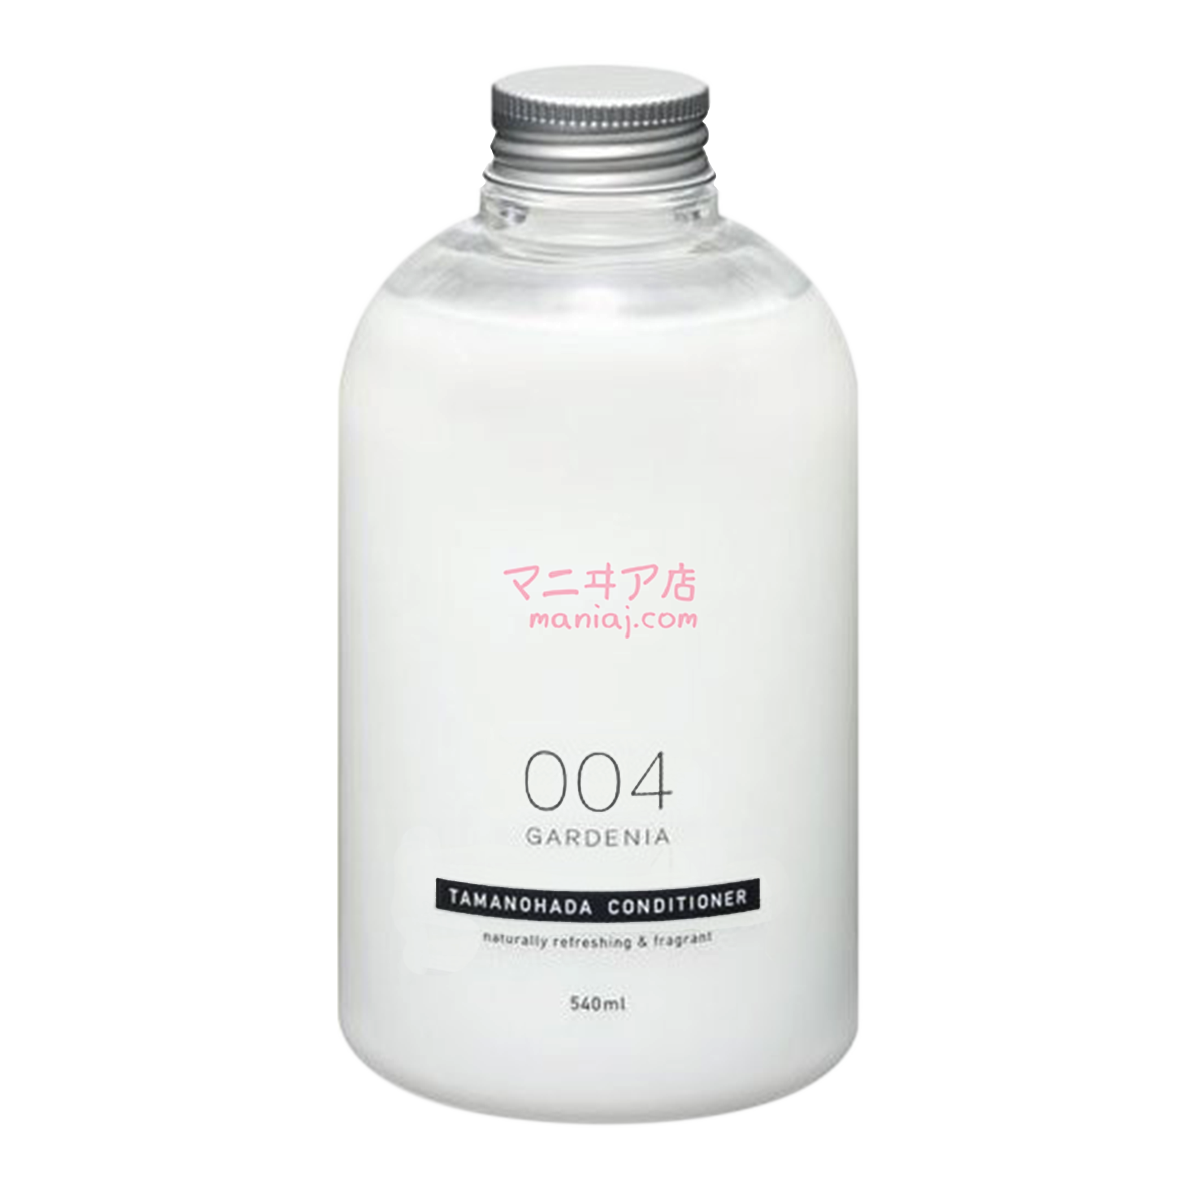 TAMANOHADA (玉の肉) Hair Conditioner-Longzi Flower Flavor 004